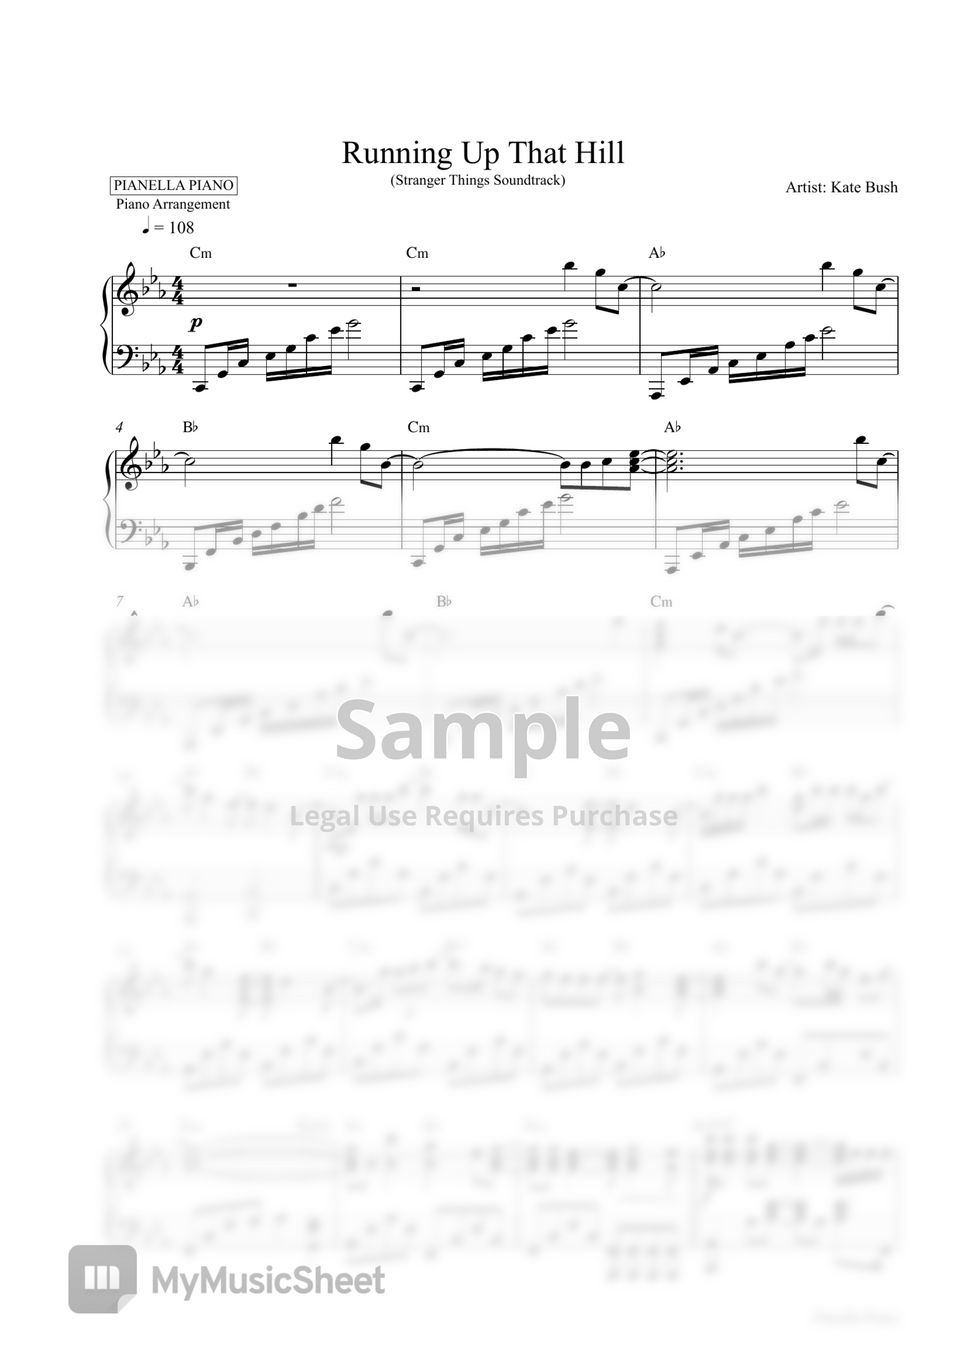 Kate Bush - Running Up That (Stranger Things Soundtrack) (Piano Sheet) by Pianella Piano